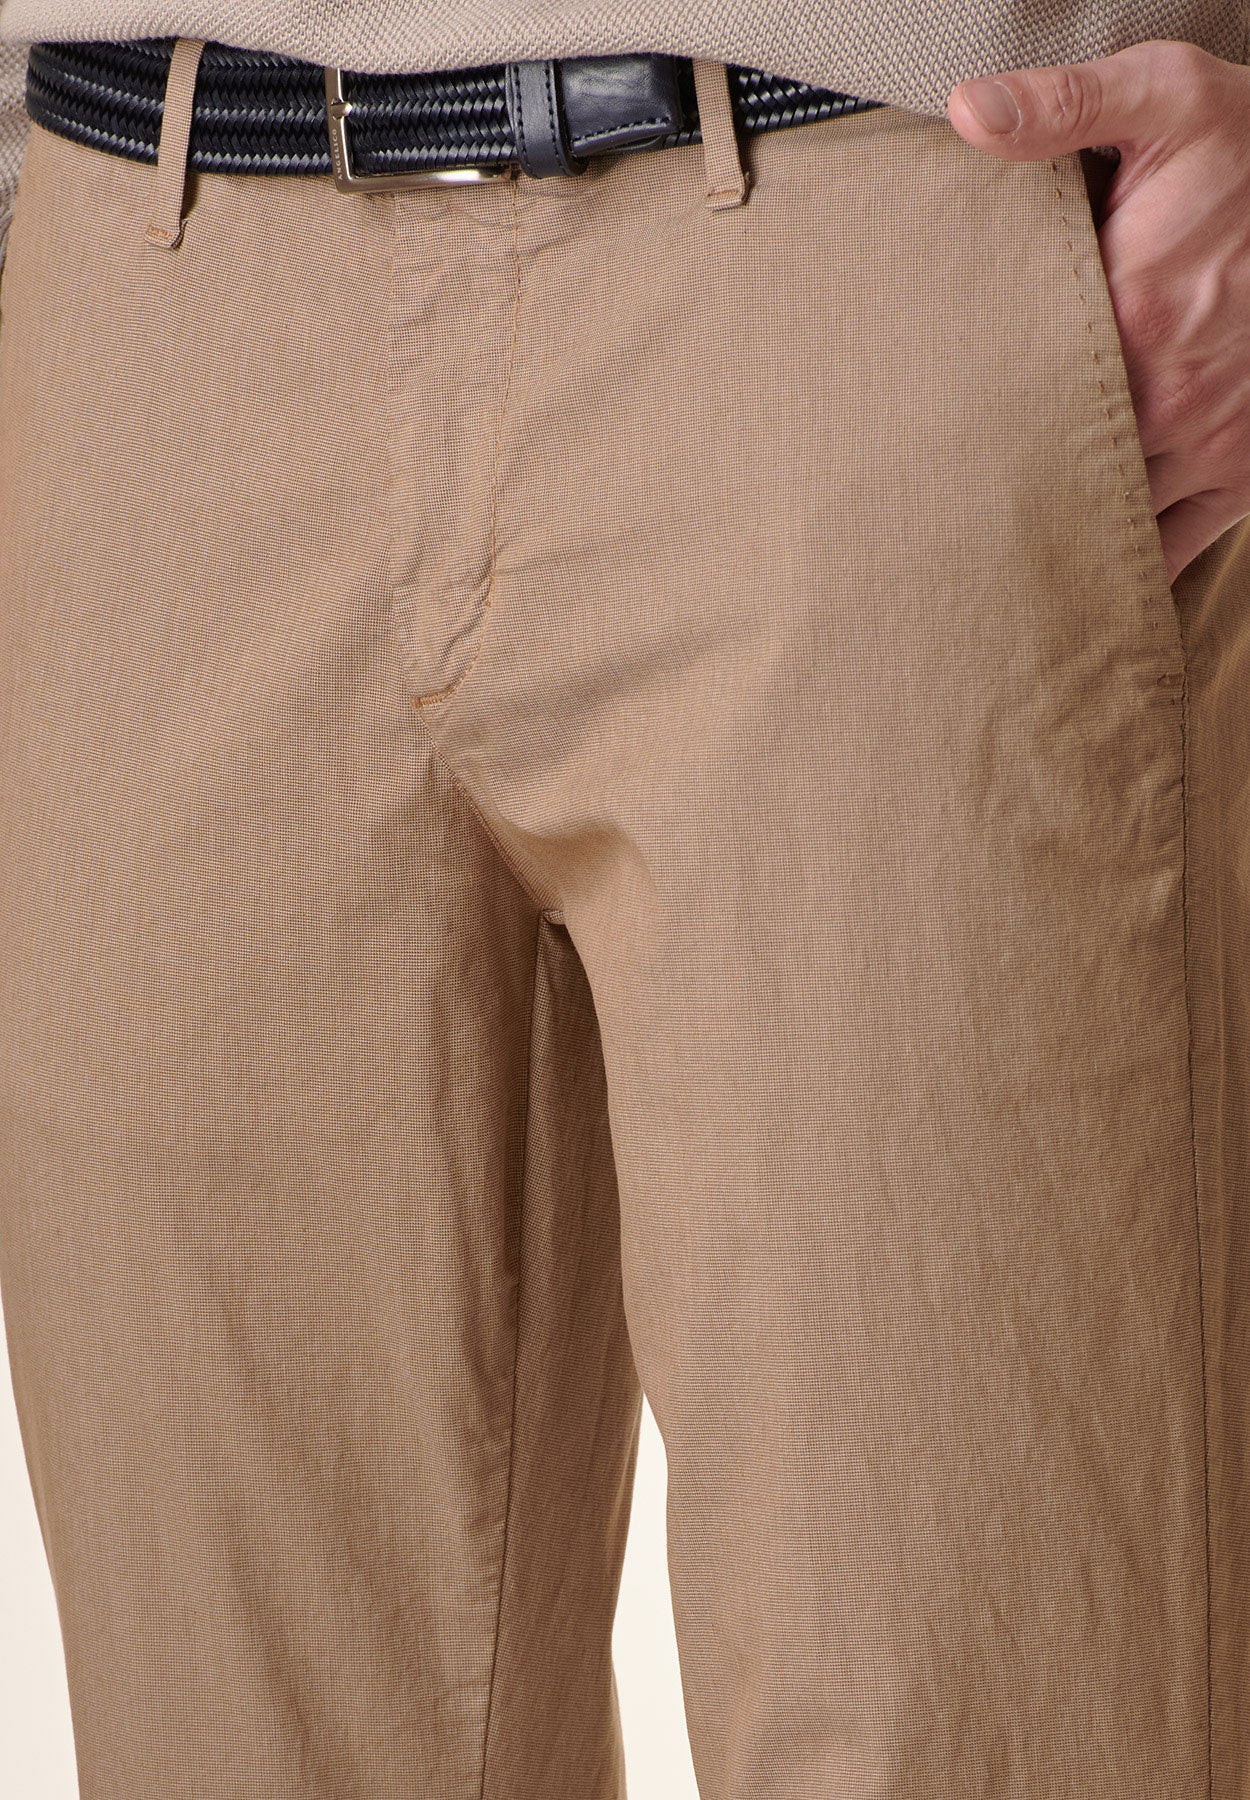 Pantalone cammello microarmatura cotone stretch regular fit